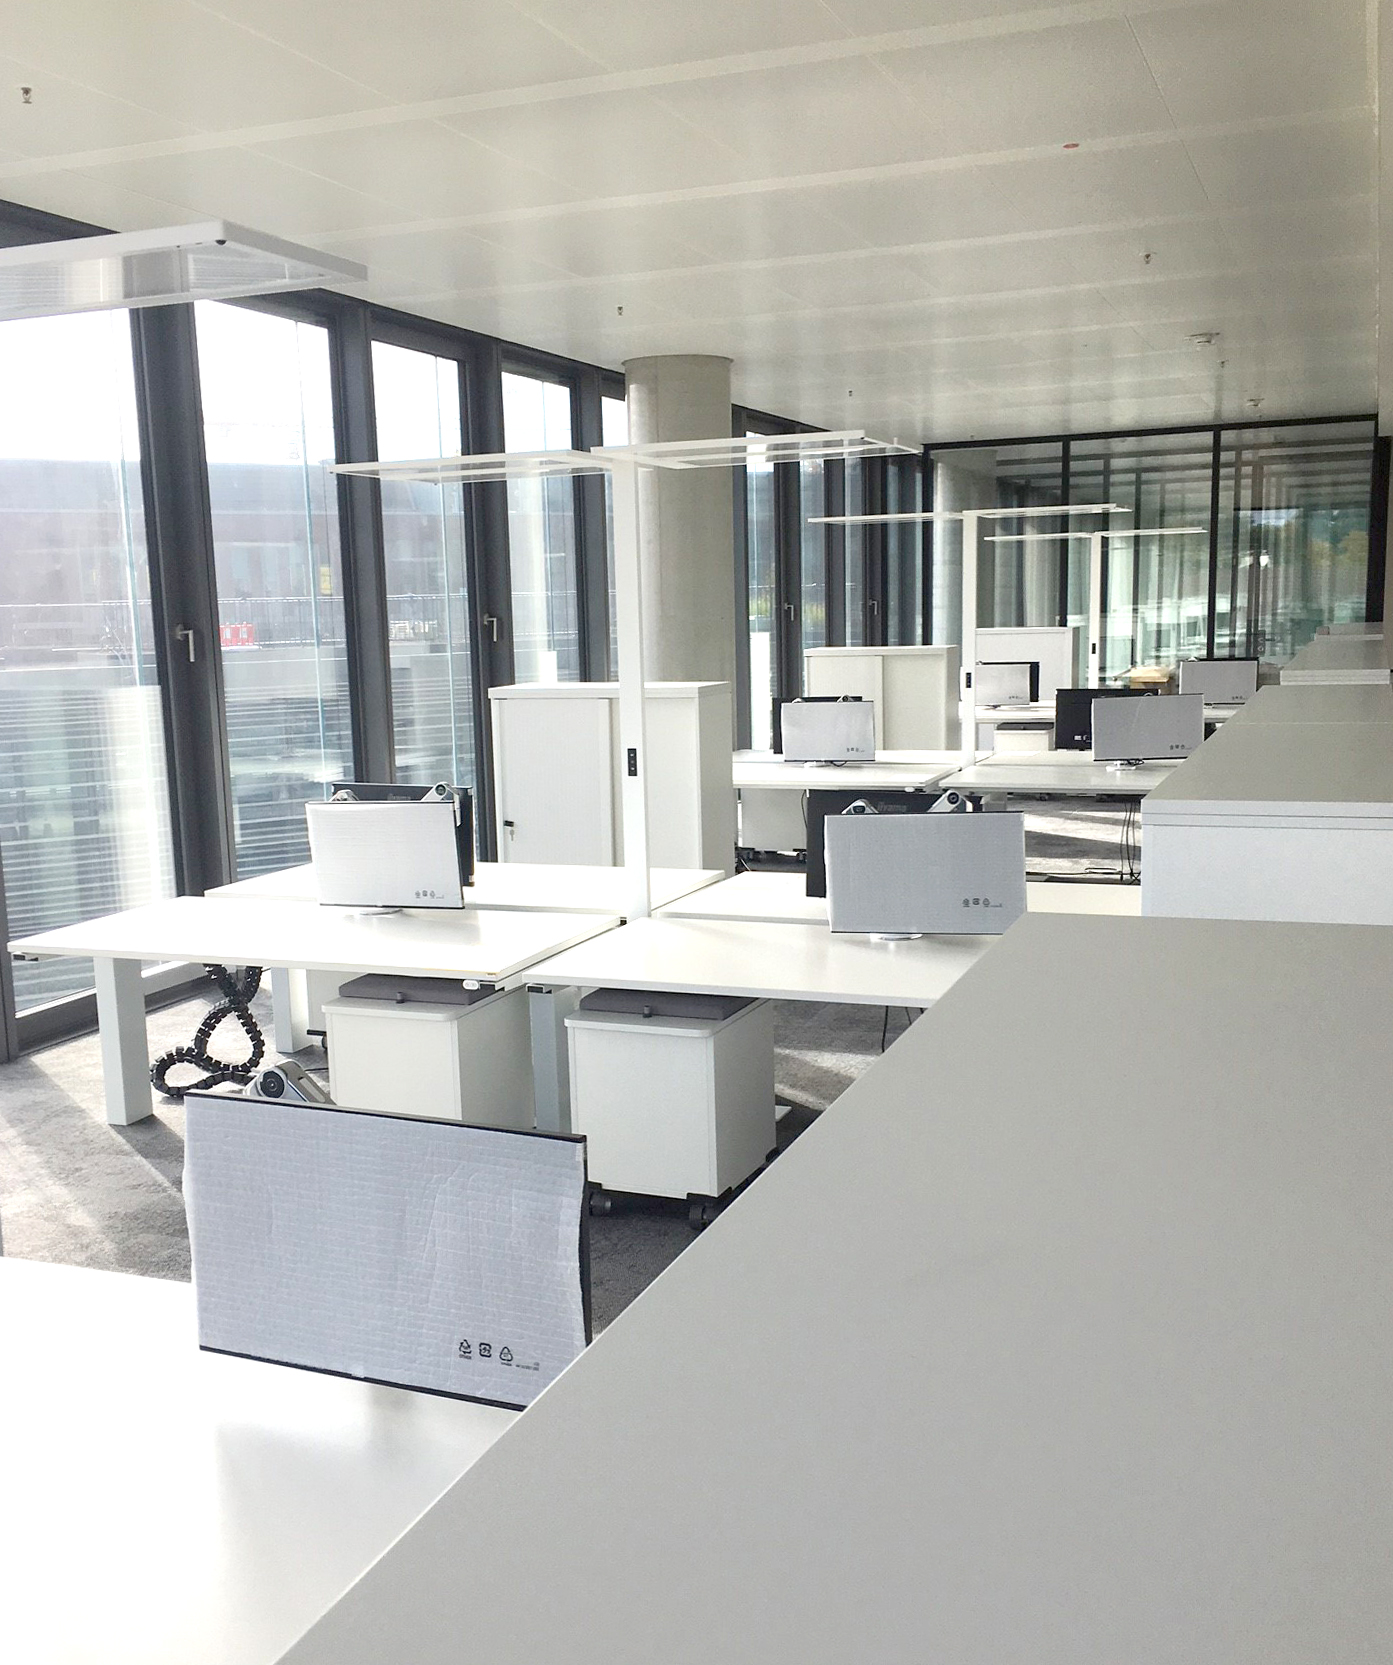 WINI Büromöbel | Herstellerinformation. L‘Oréal-Headquarter in Düsseldorf